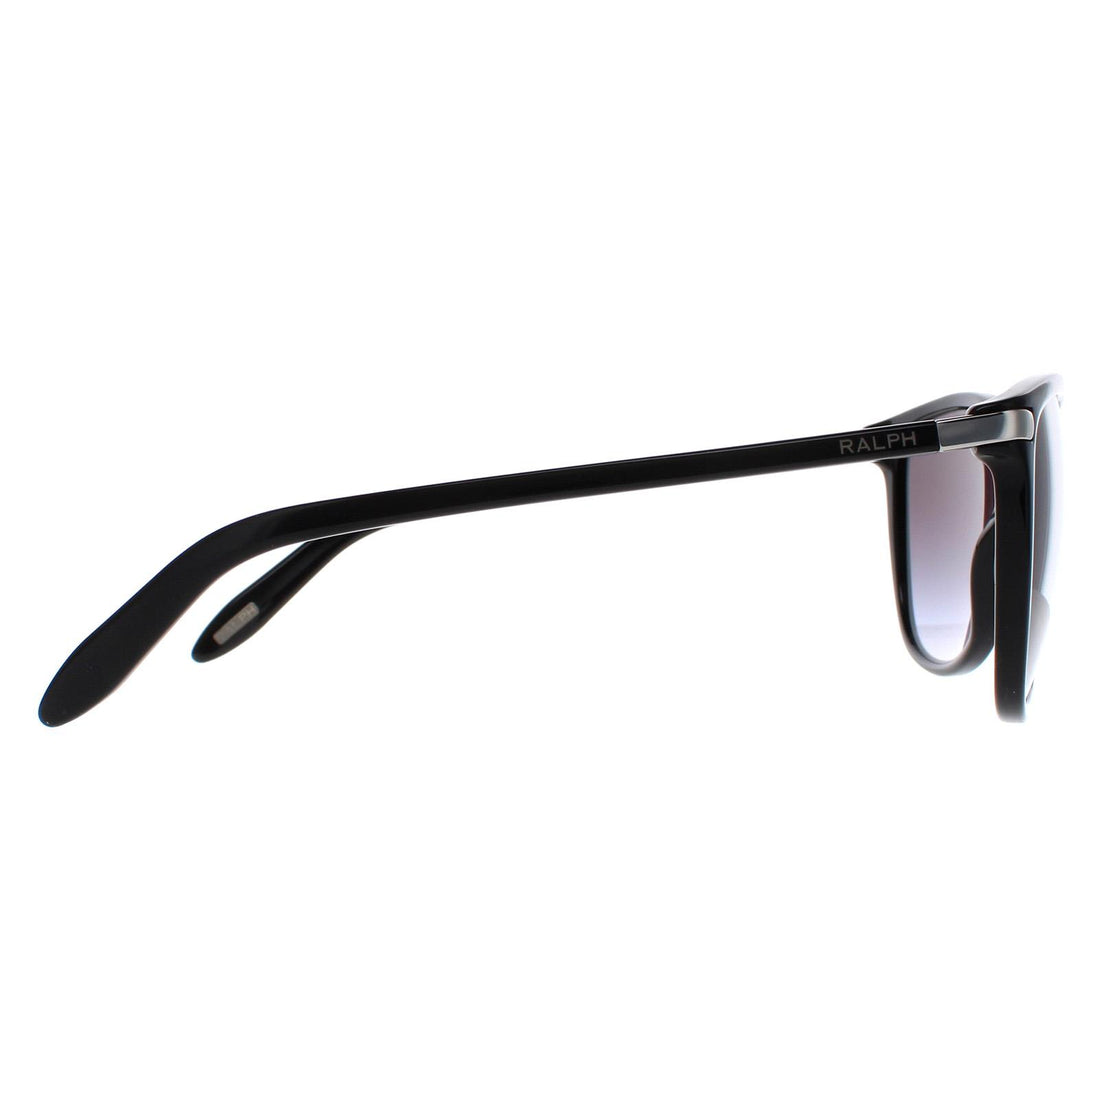 Ralph by Ralph Lauren Sunglasses 5160 501/11 Black Grey Gradient